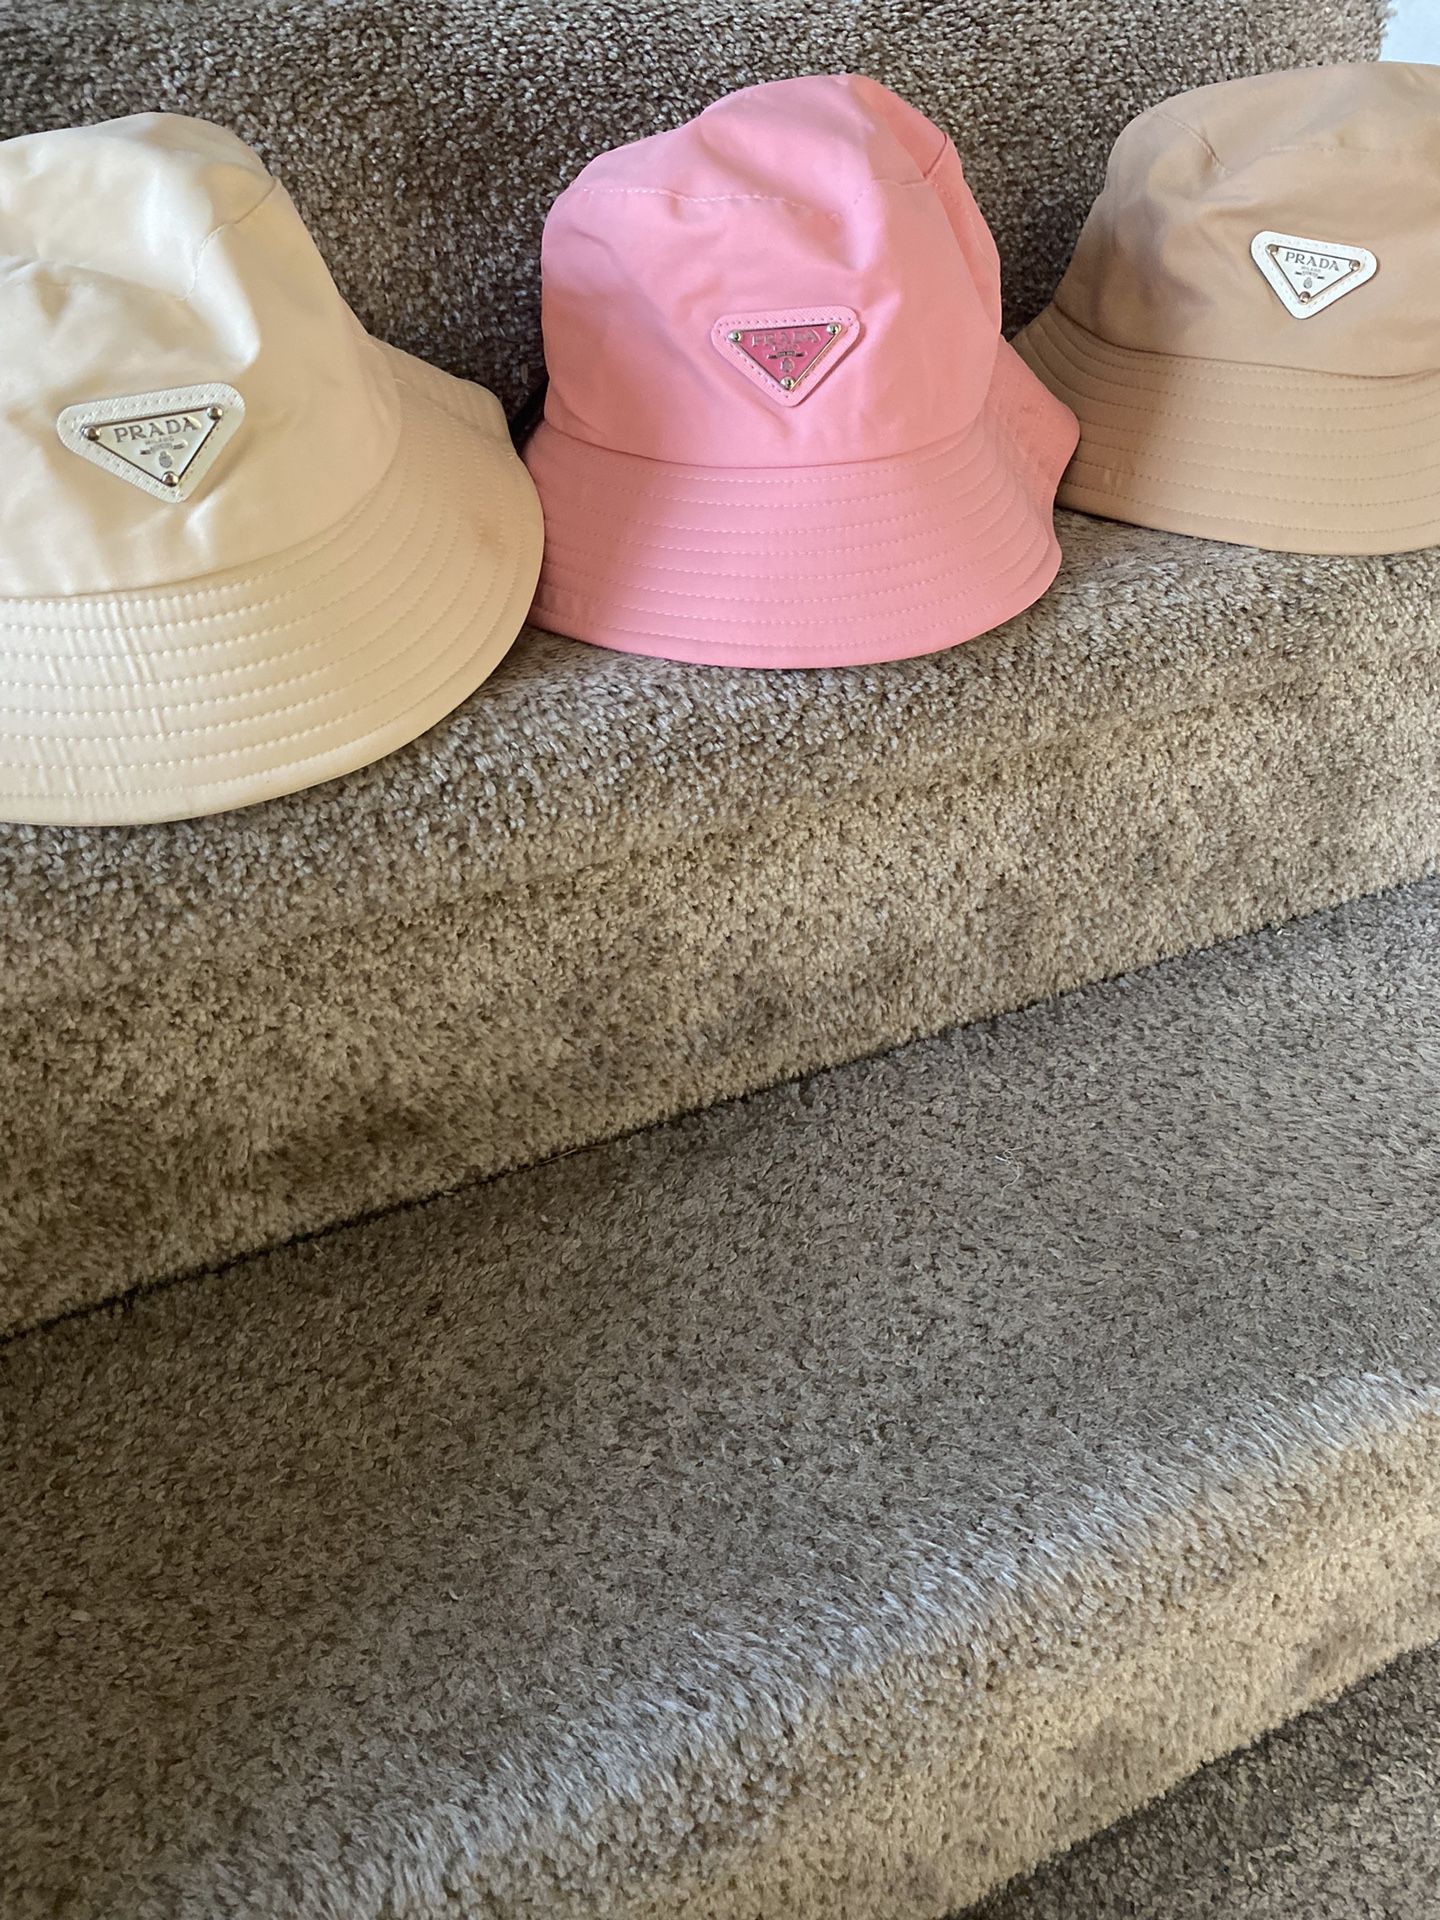 Prada Bucket Hat (Pink,Tan,Brown)